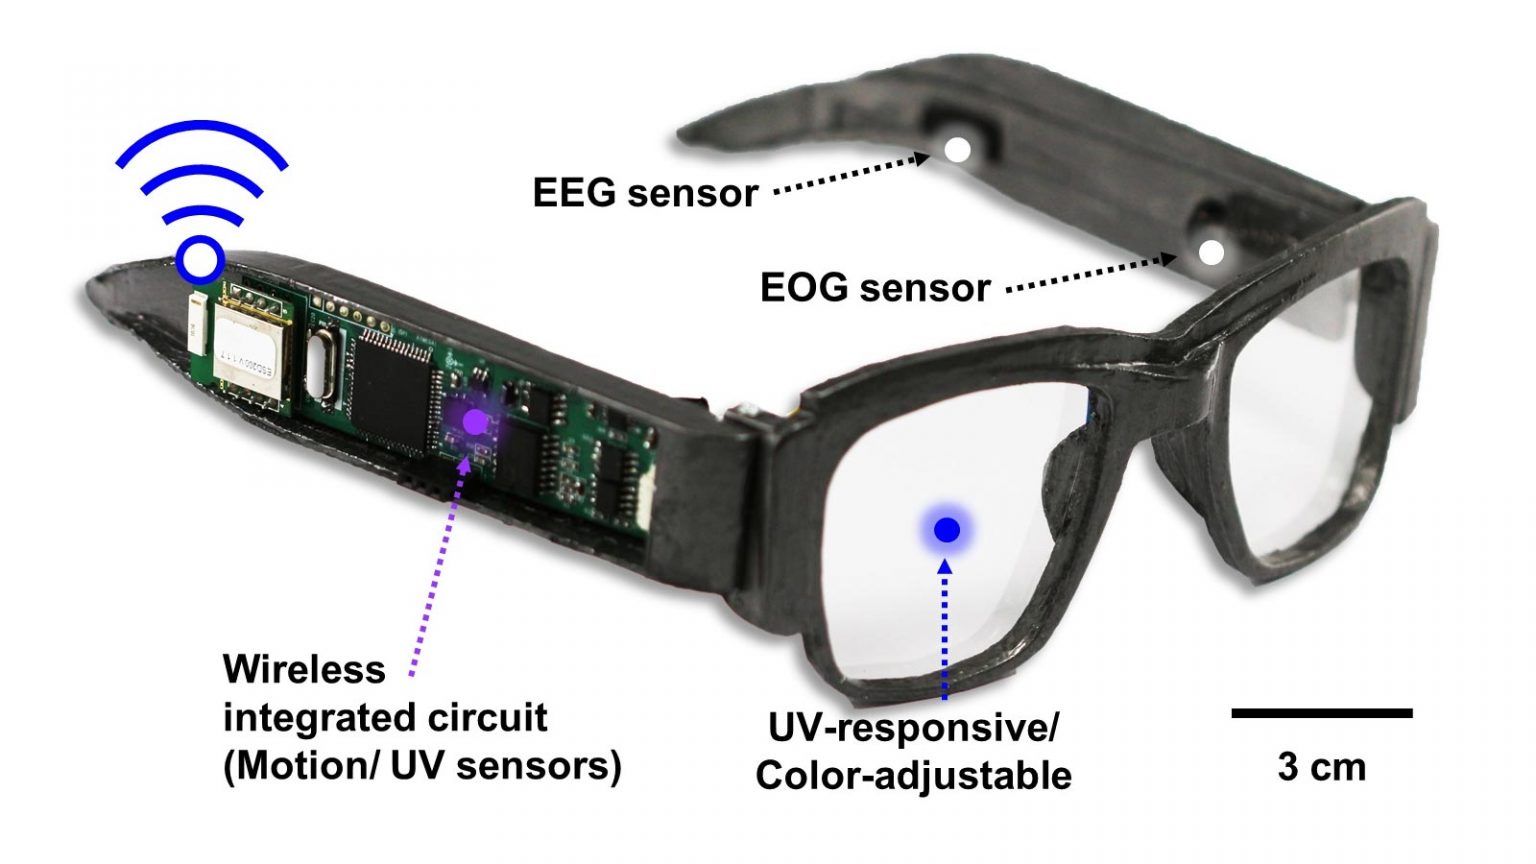 Multifunctional Smart EGlasses Monitor Health, Protect Eyes, Control